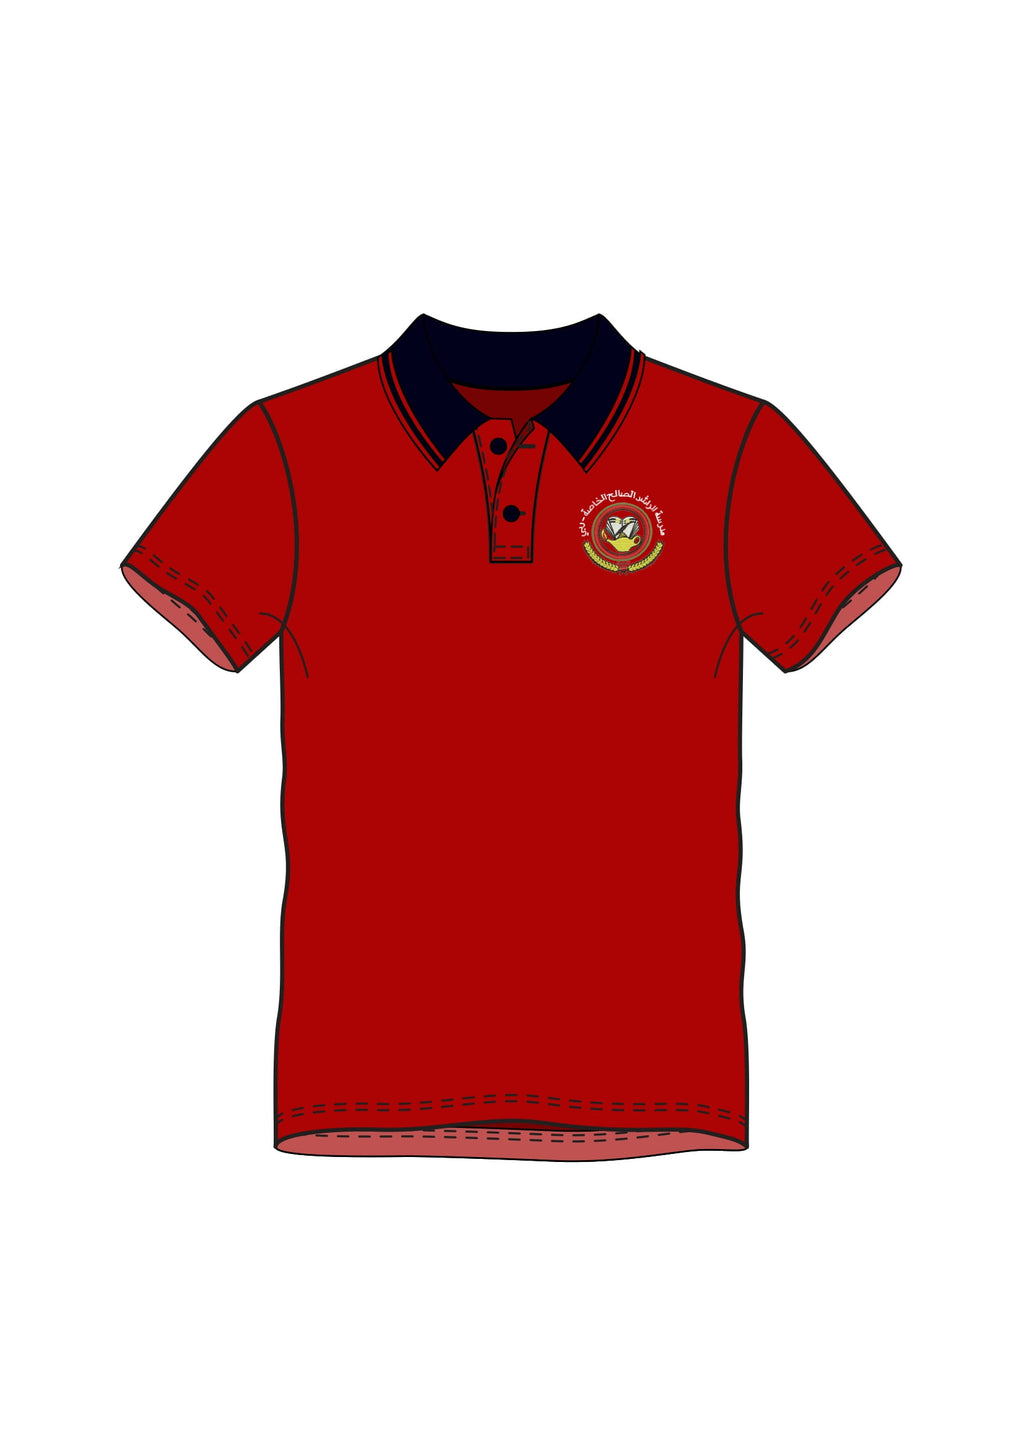 Girls Sports Red T-Shirt (KG-12)-RAS